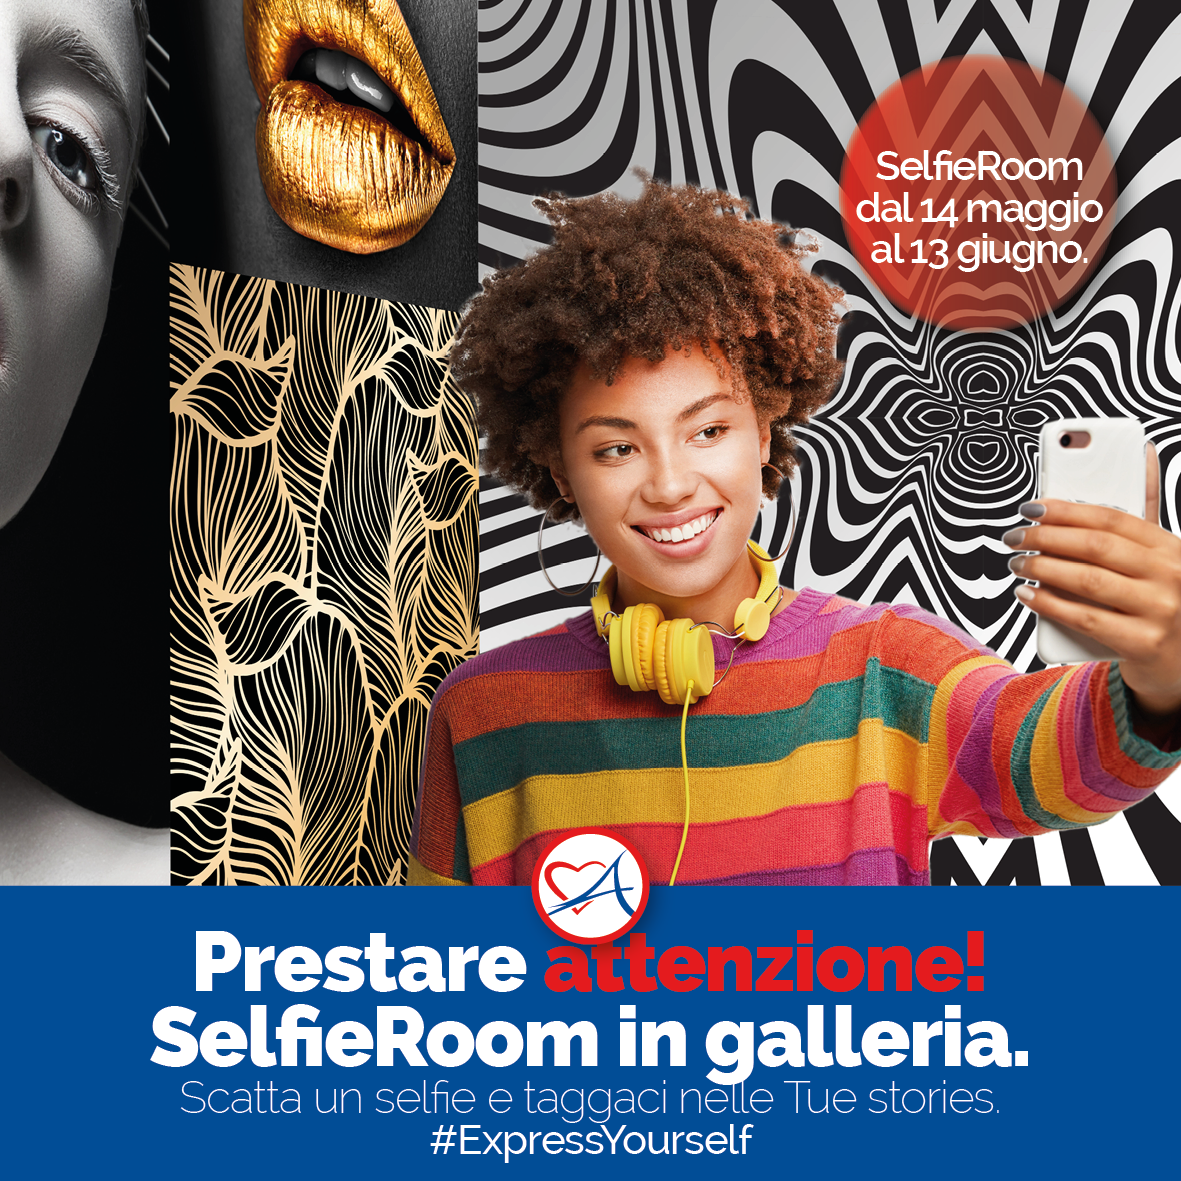 Centro Cuore Adriatico, SelfieRoom contest